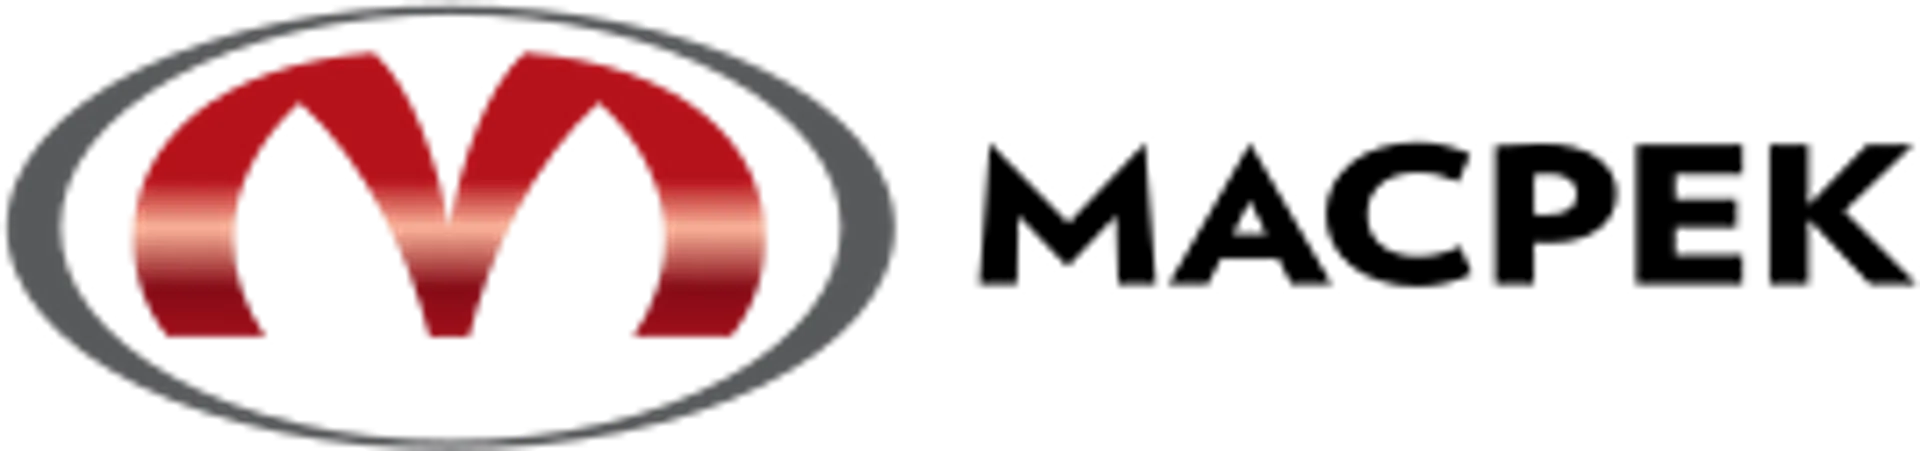 MACPEK logo de circulaires